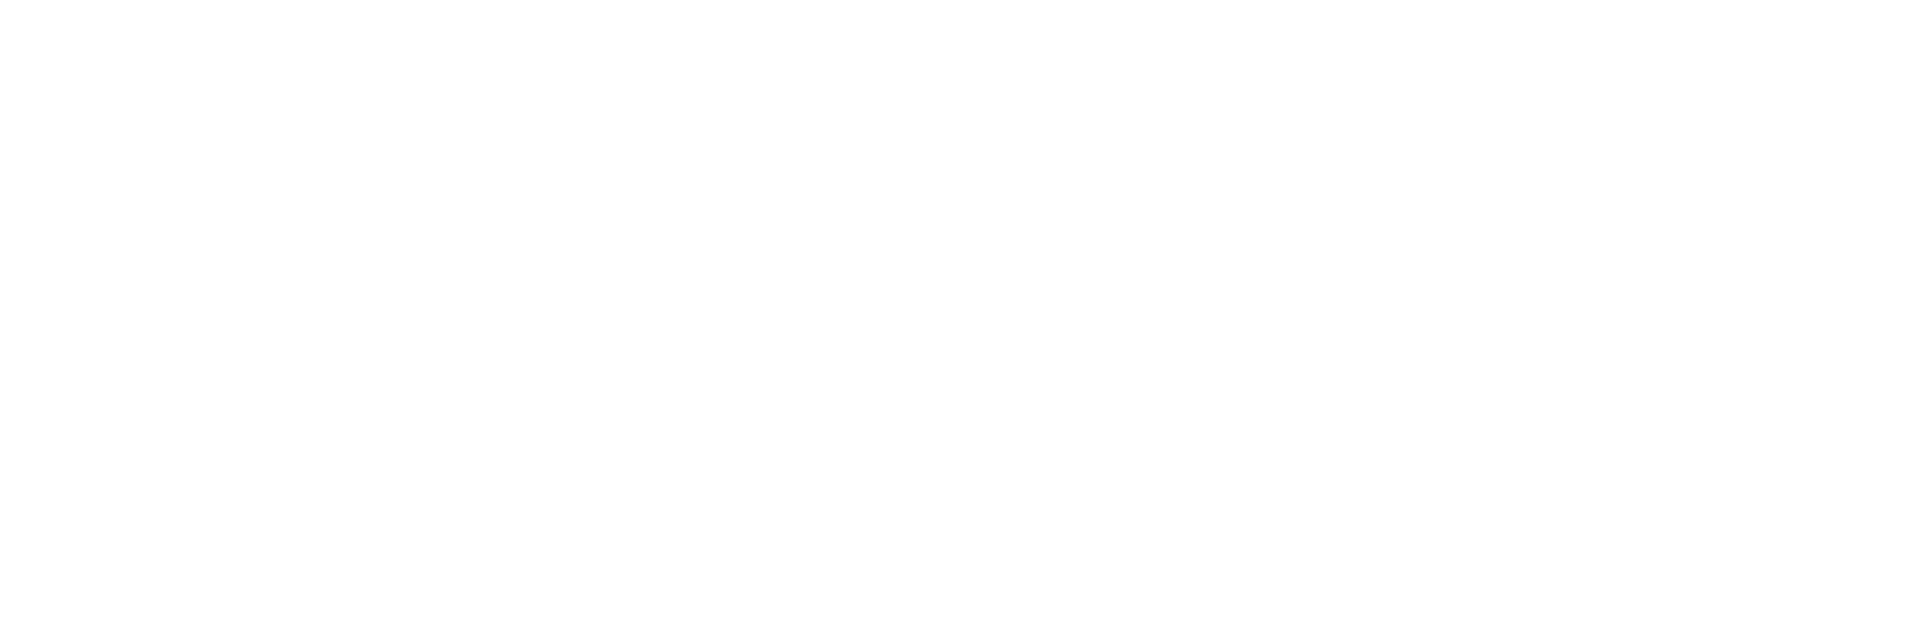 Integrity Lounge Designs